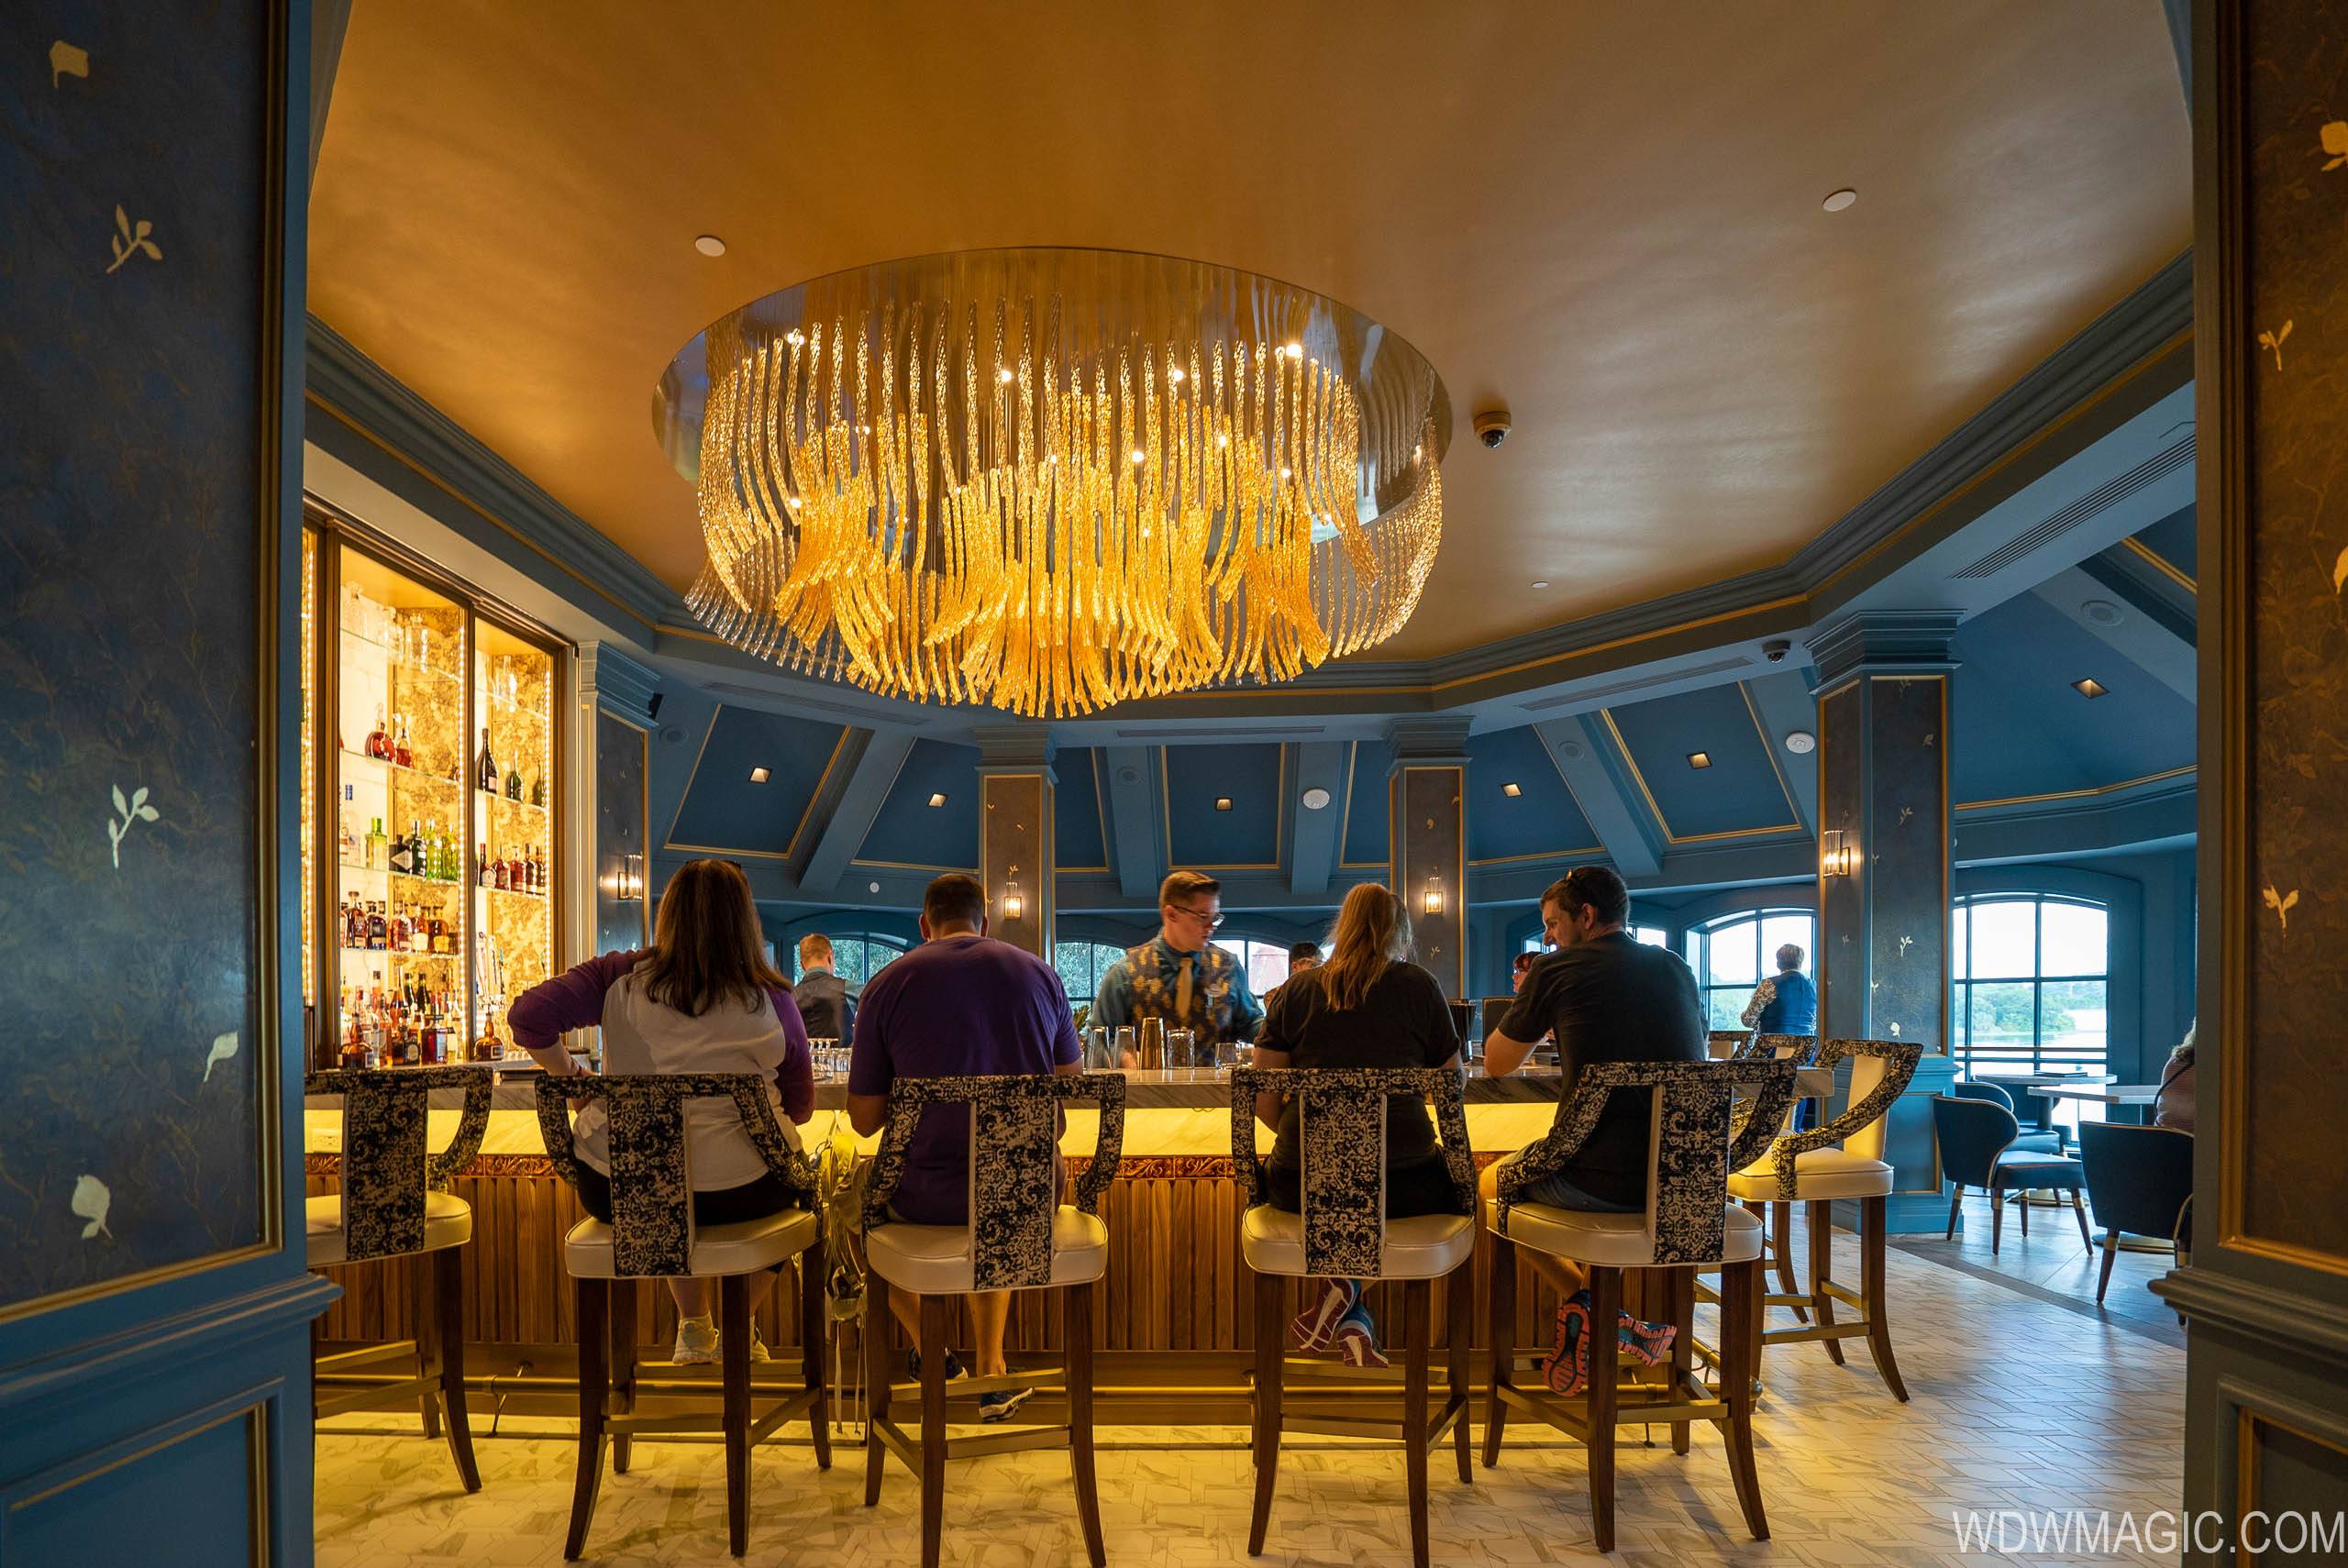 PHOTOS - The Enchanted Rose lounge opens at Disney's Grand Floridian Resort